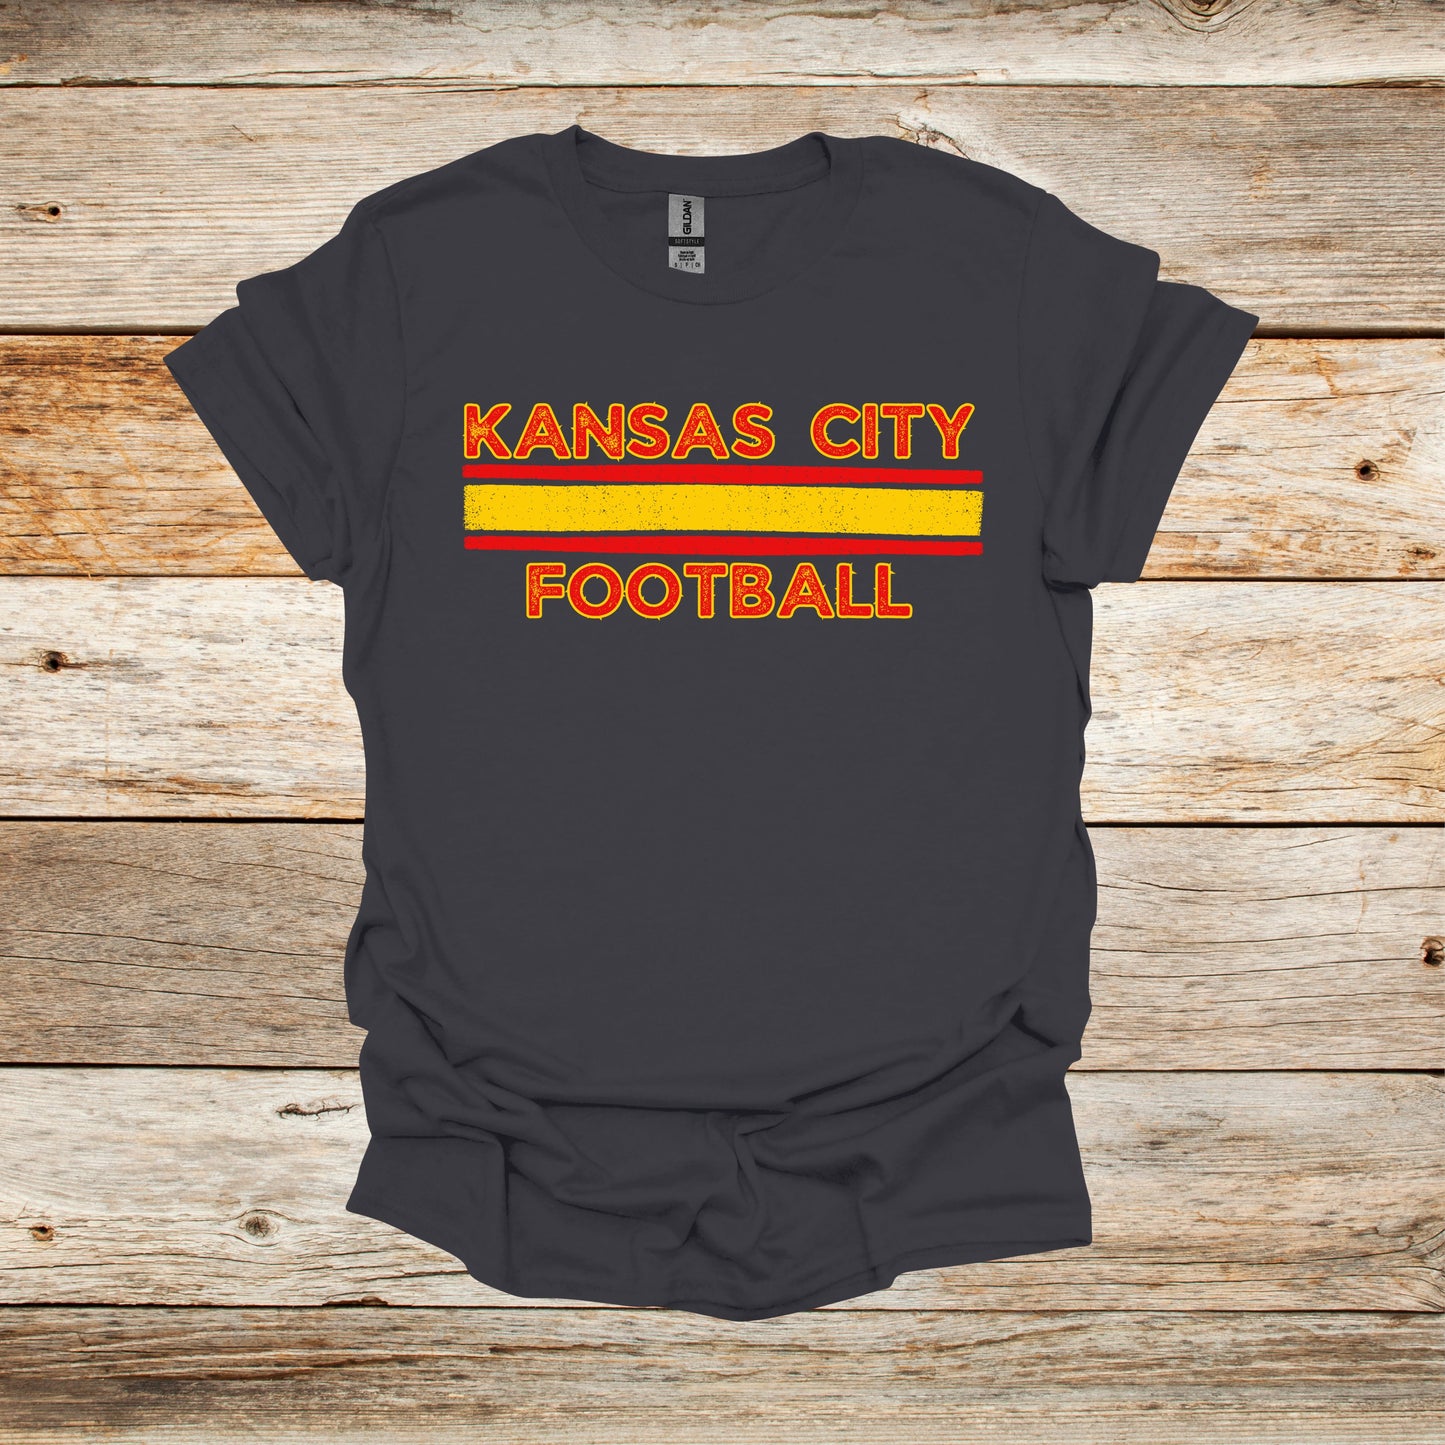 Football T-Shirt - Kansas City Chiefs - Kansas City Football - Adult and Children's Tee Shirts - Chiefs - Sports T-Shirts Graphic Avenue Charcoal Adult Small 